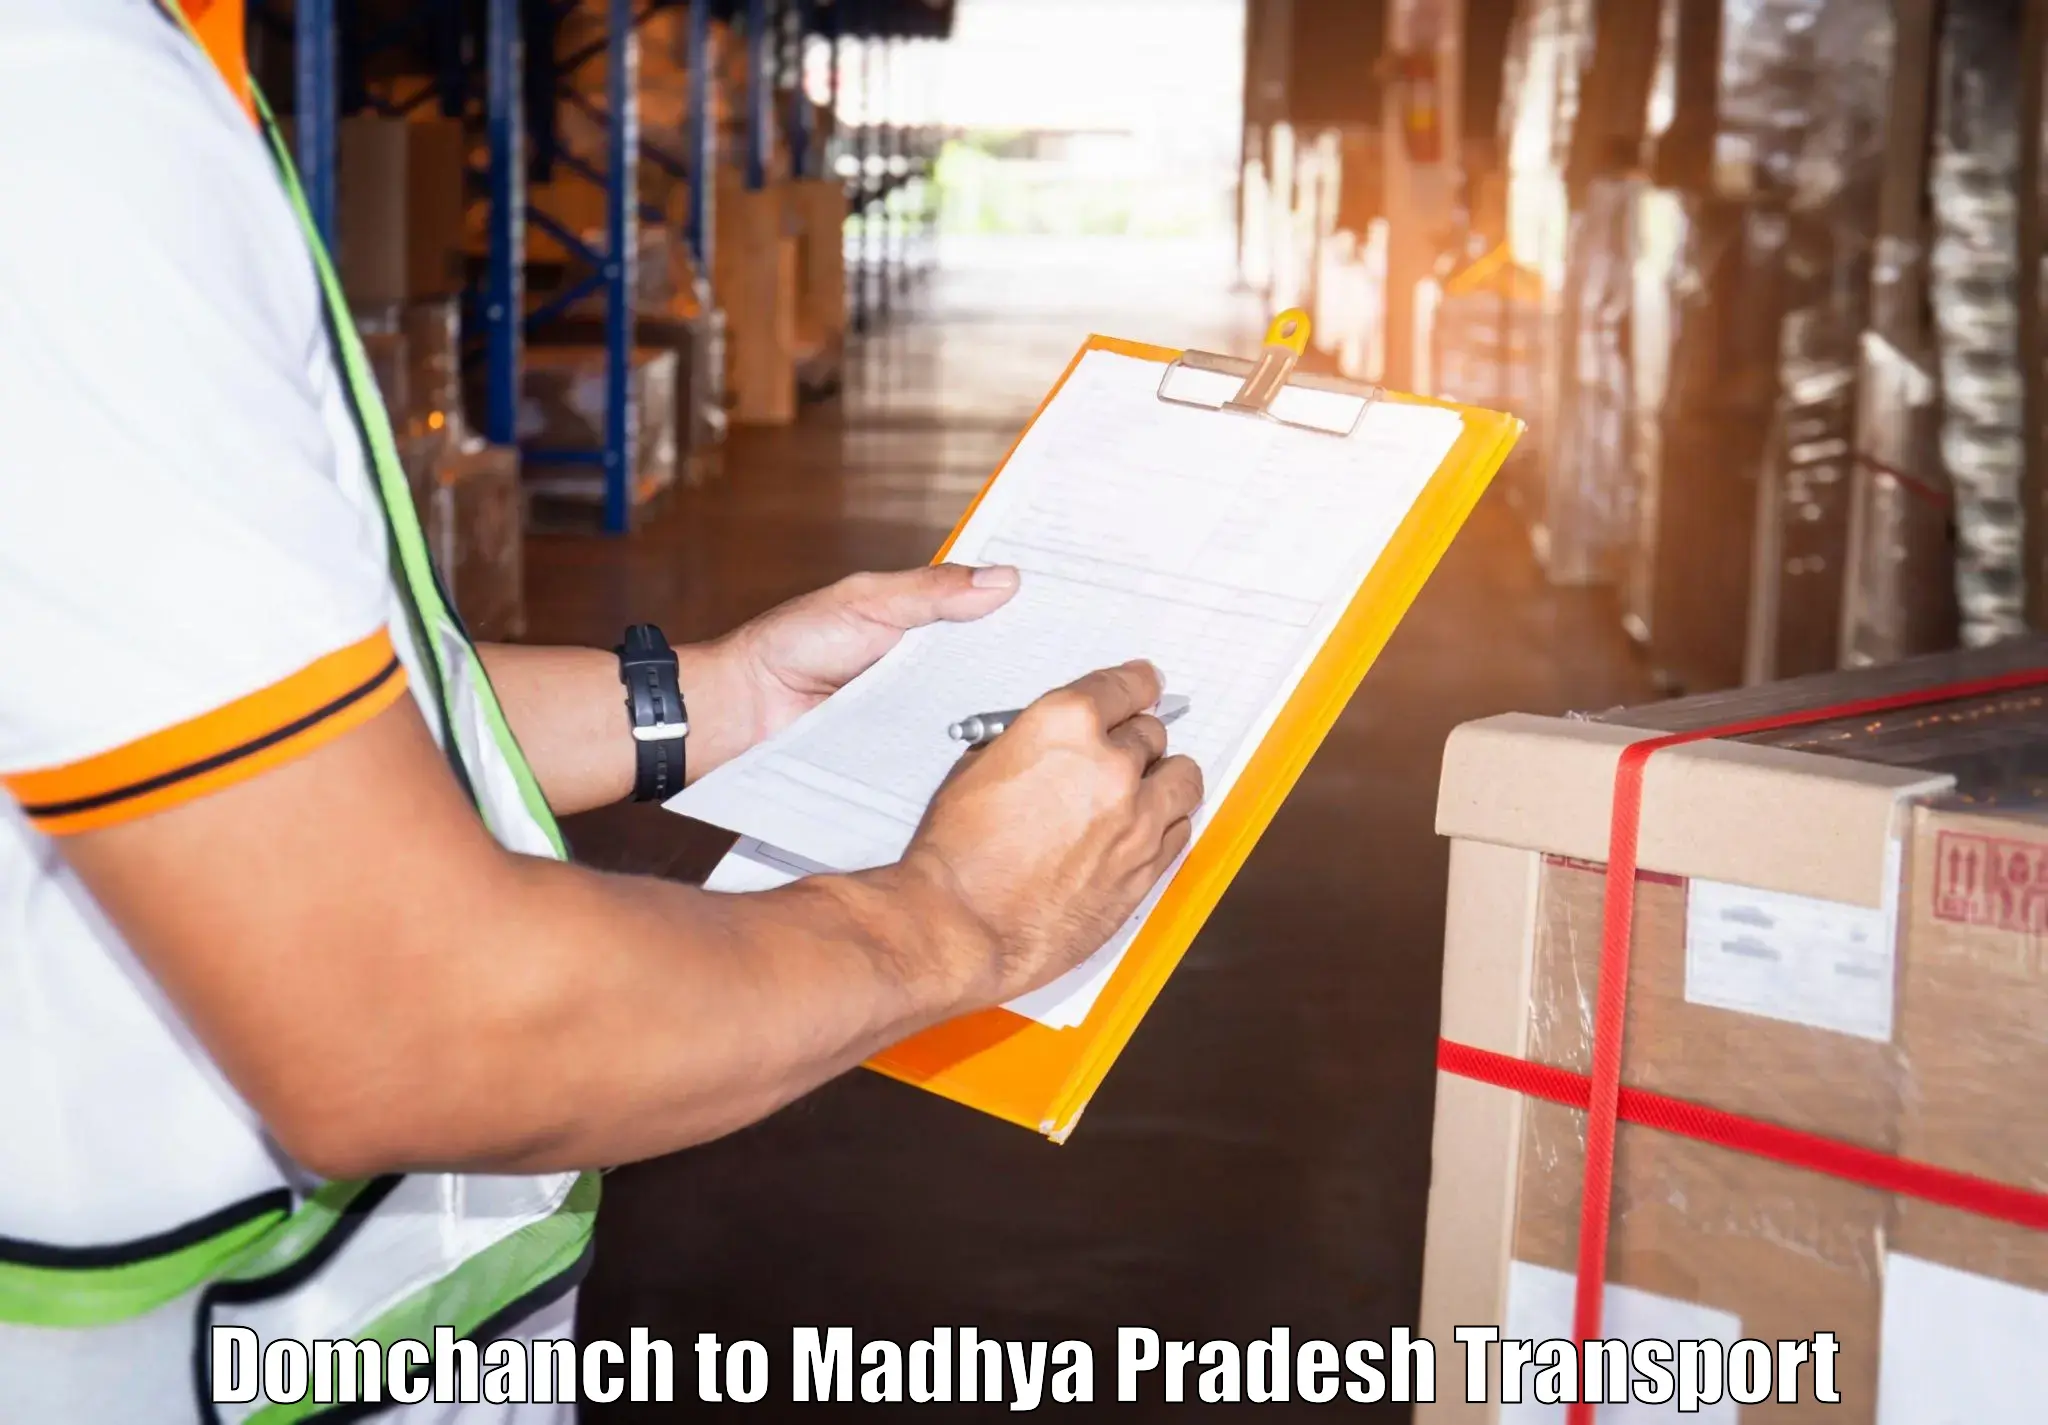 Truck transport companies in India Domchanch to Itarsi